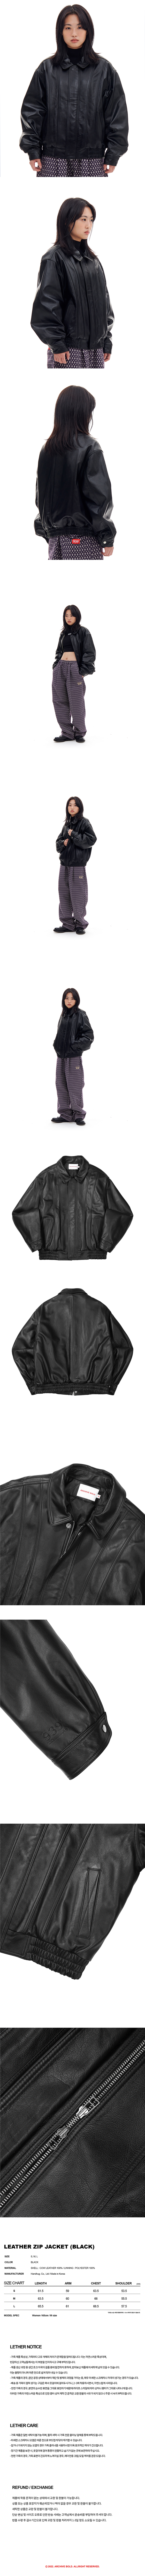 archive leather zip jacket